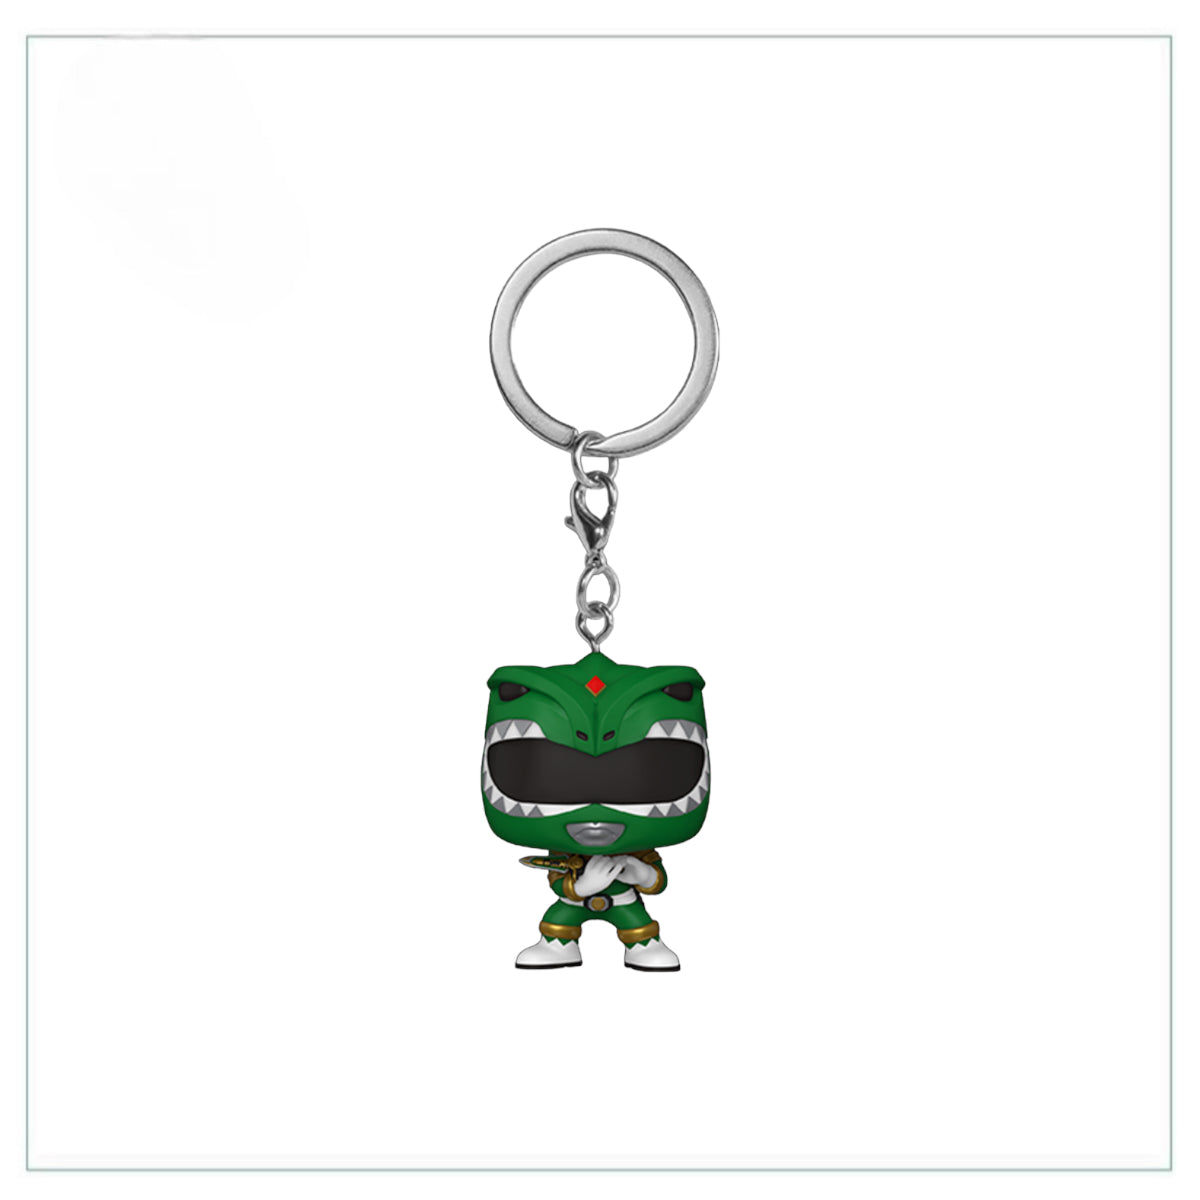 Green Ranger Funko Pocket Pop Keychain! - Power Rangers